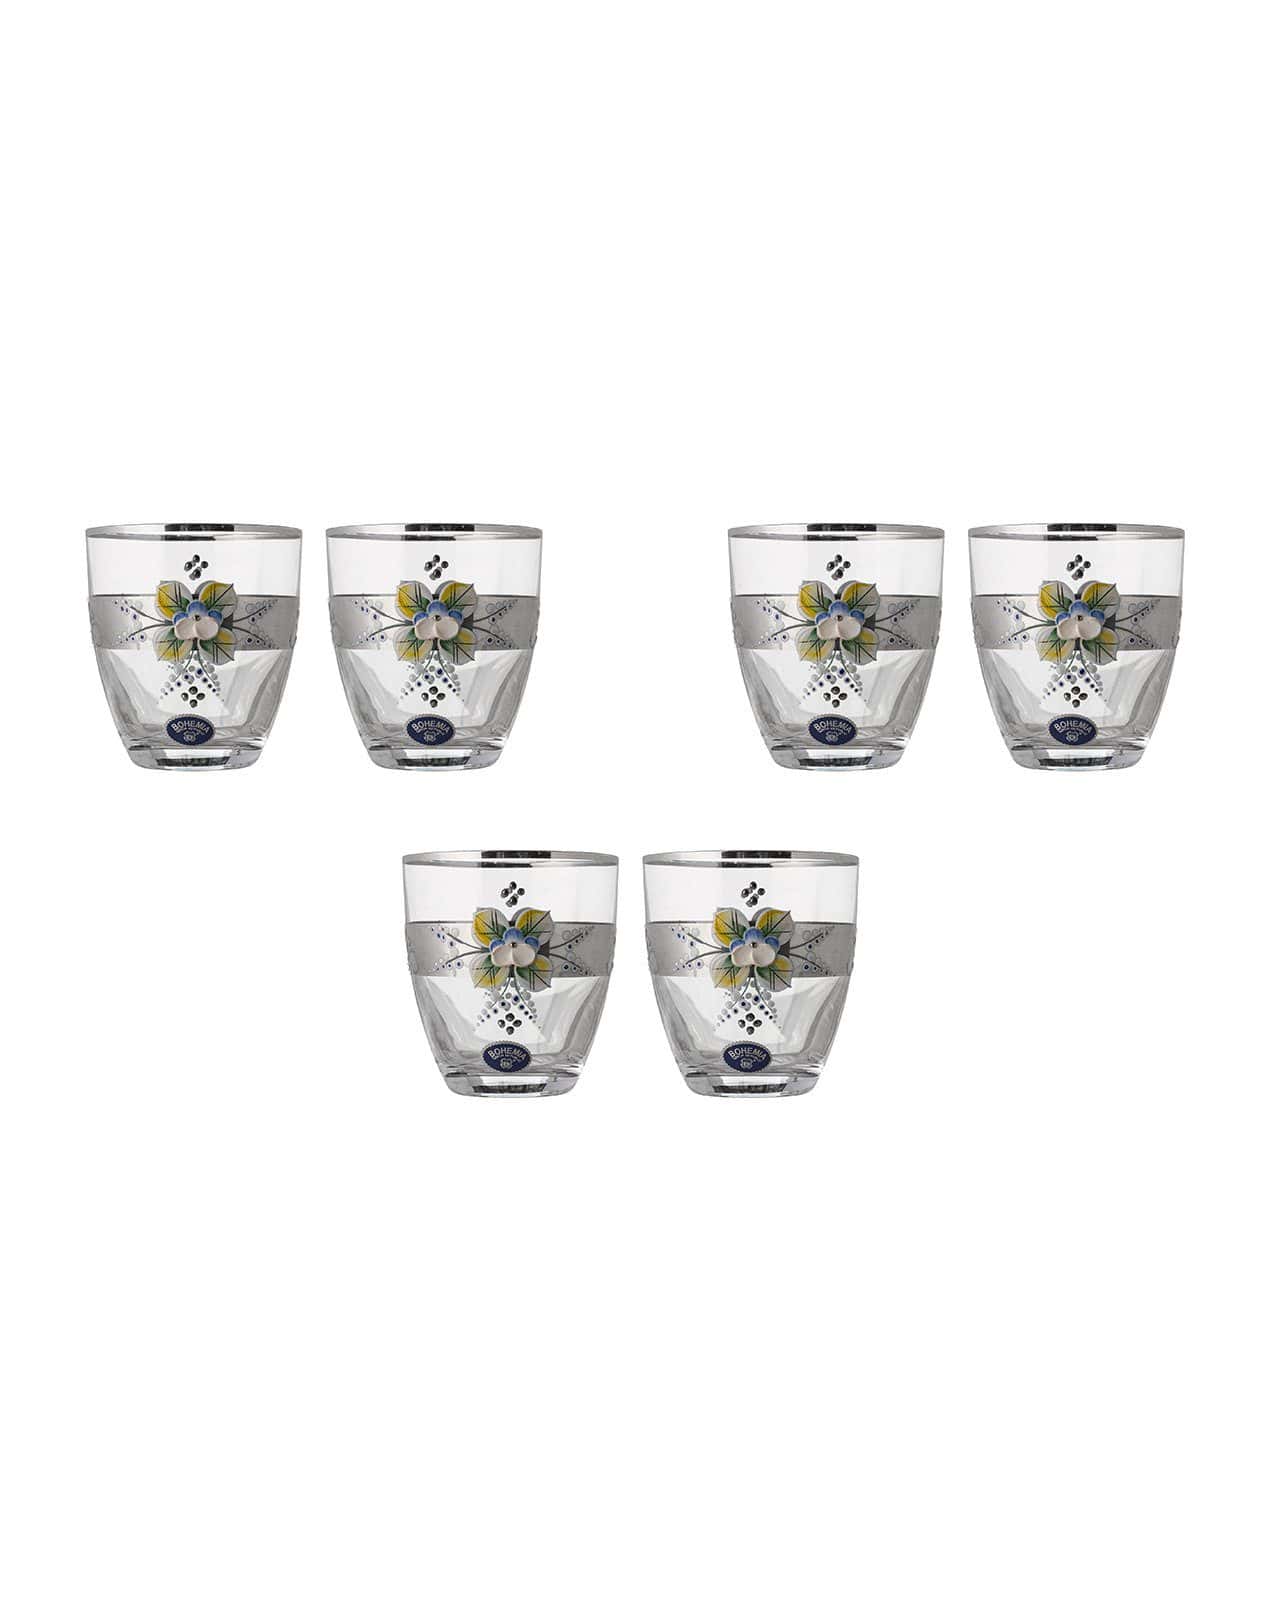 Bohemia Crystal - Tumbler Glass Set 6 Pieces - Flowers & Silver - 210ml - 2700010375